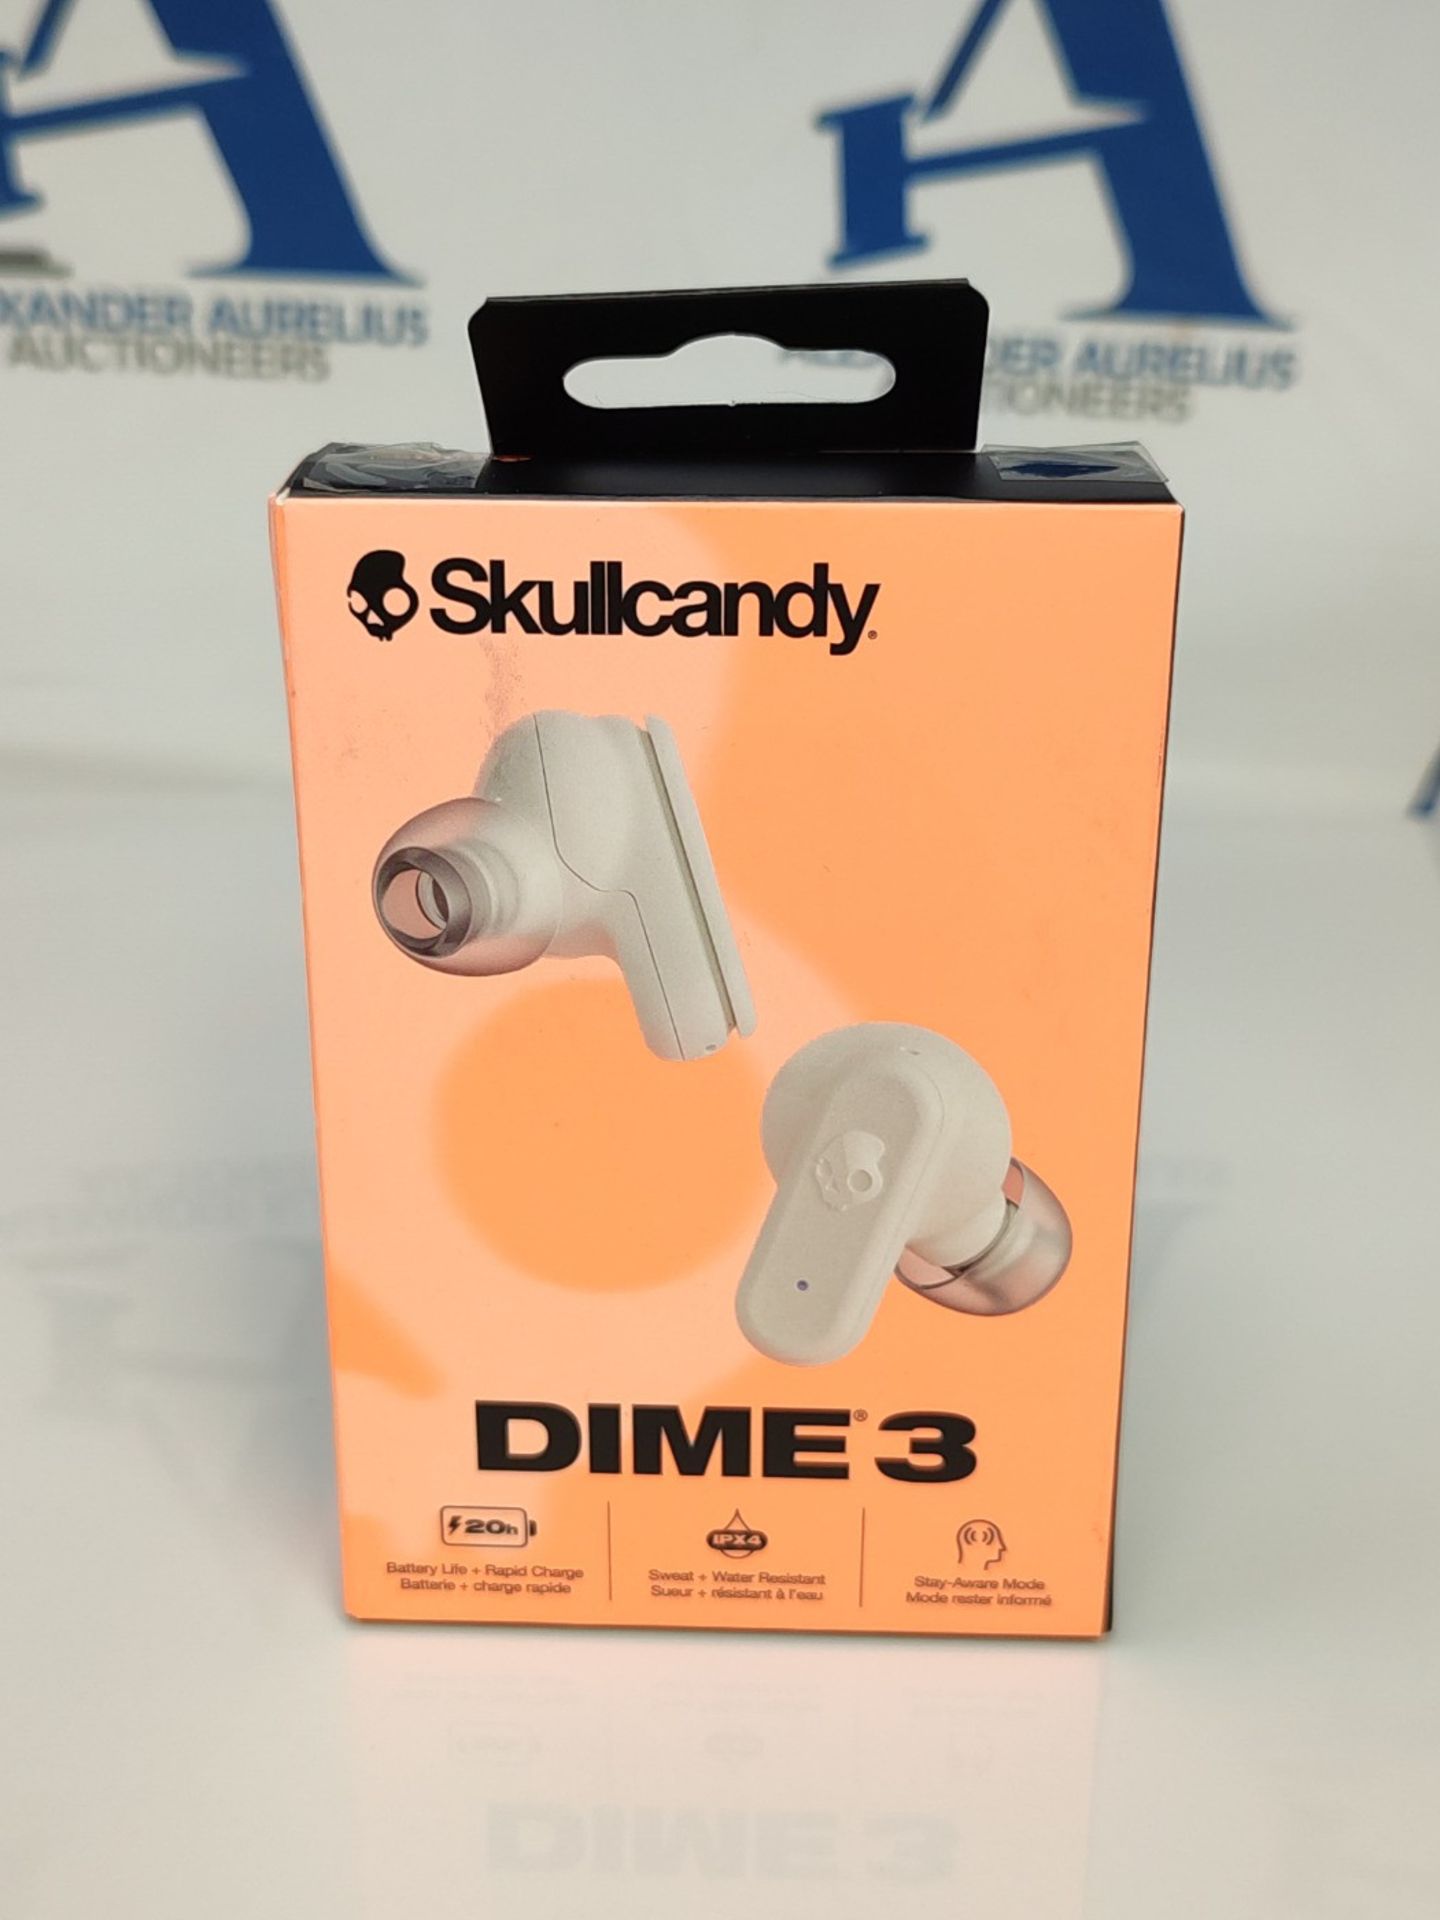 Skullcandy Dime 3 Wireless In-Ear Headphones with Microphone, 20 Hours of Autonomy, Co - Bild 2 aus 3